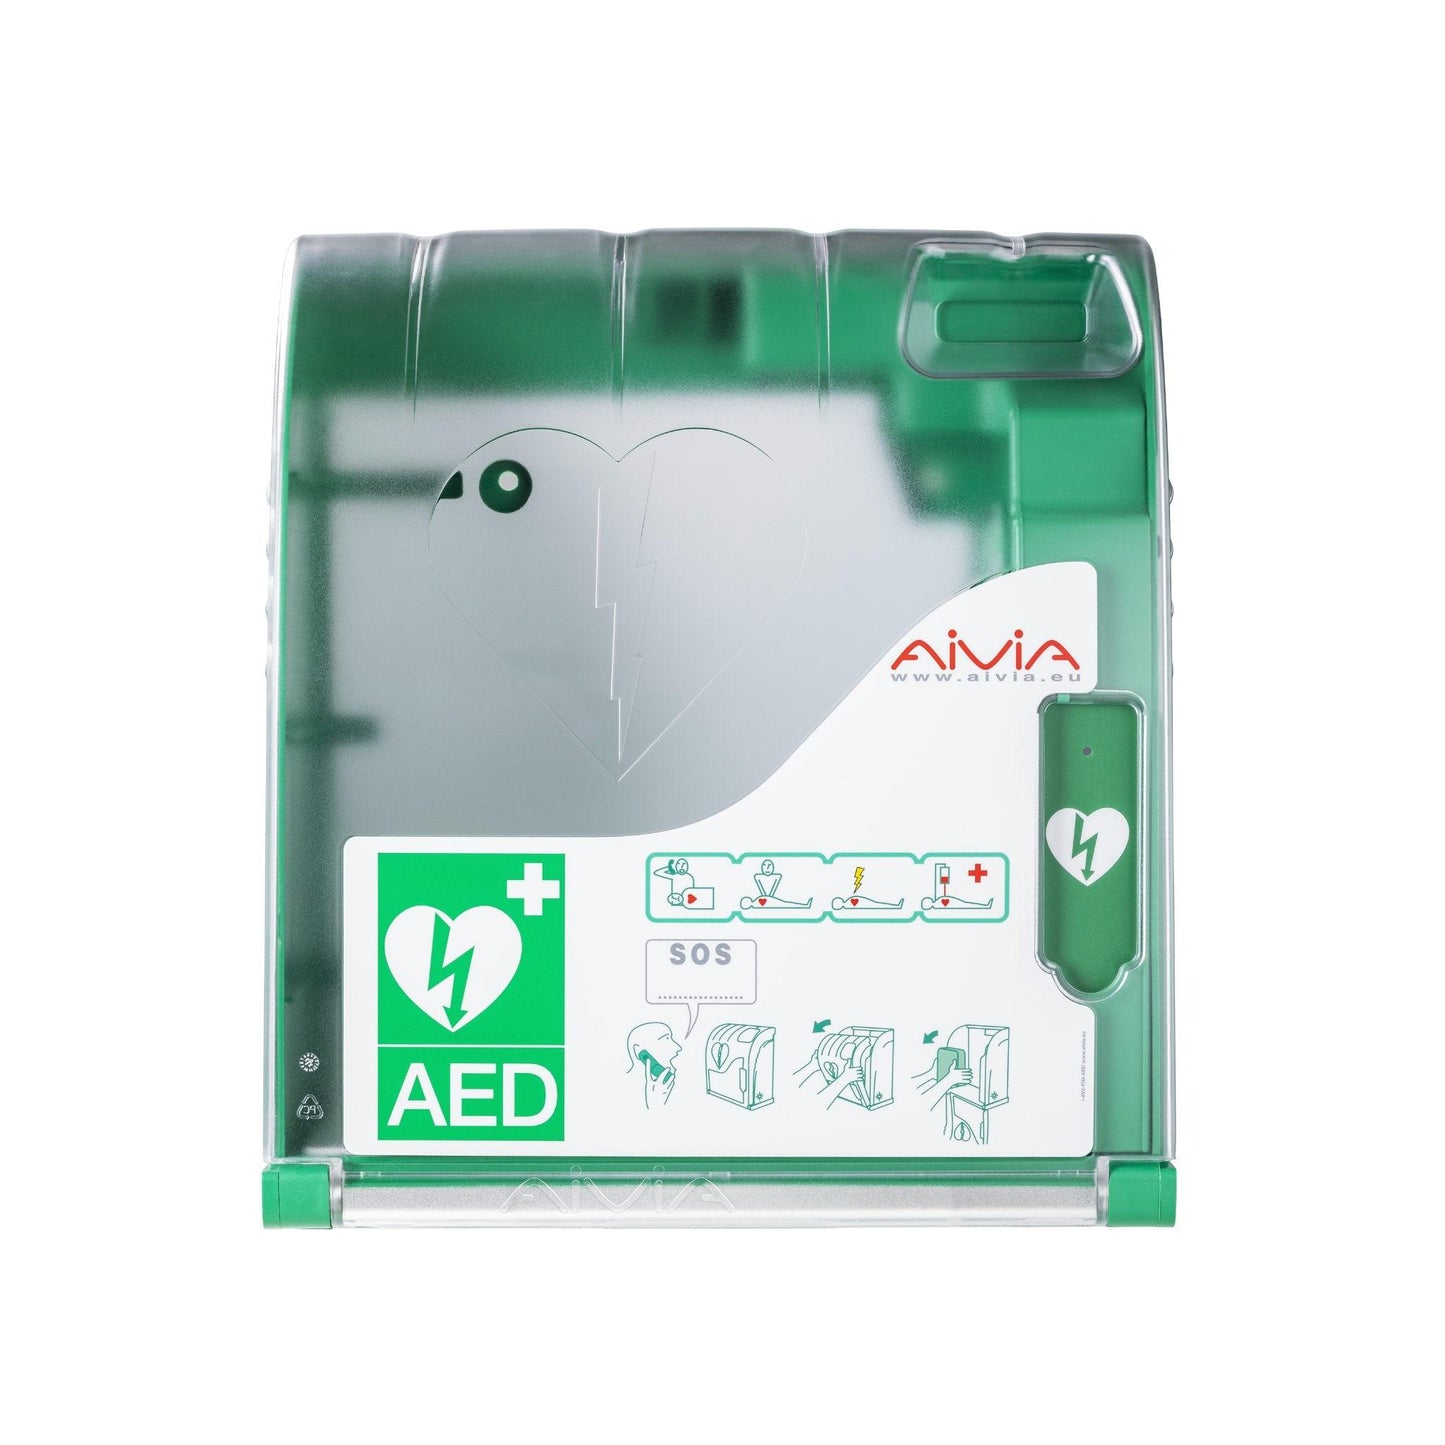 Binnenkast voor AED: Aivia 100 - X2A100-XX100 - ProCardio - X2A100-XX100